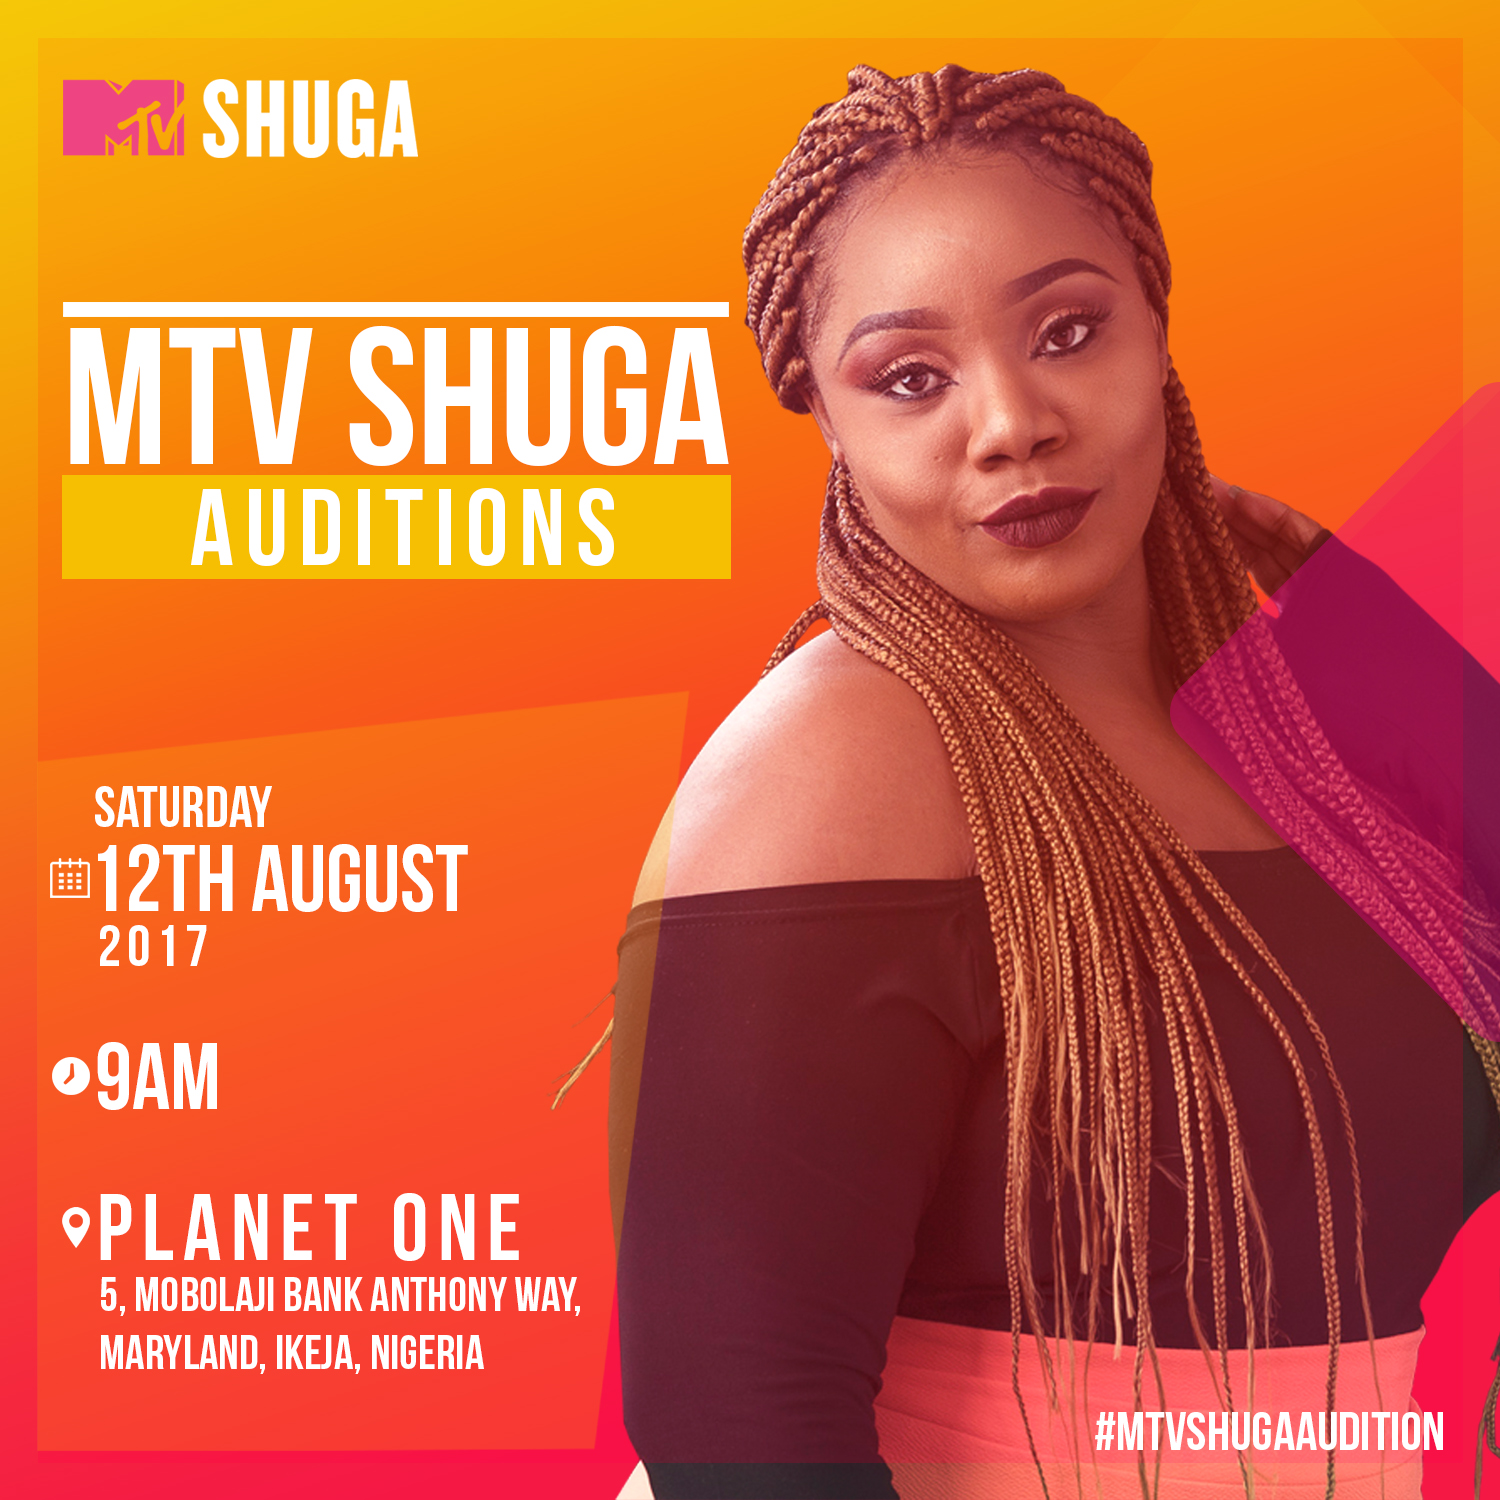 MTV SHUGA AUDITION announcement 3